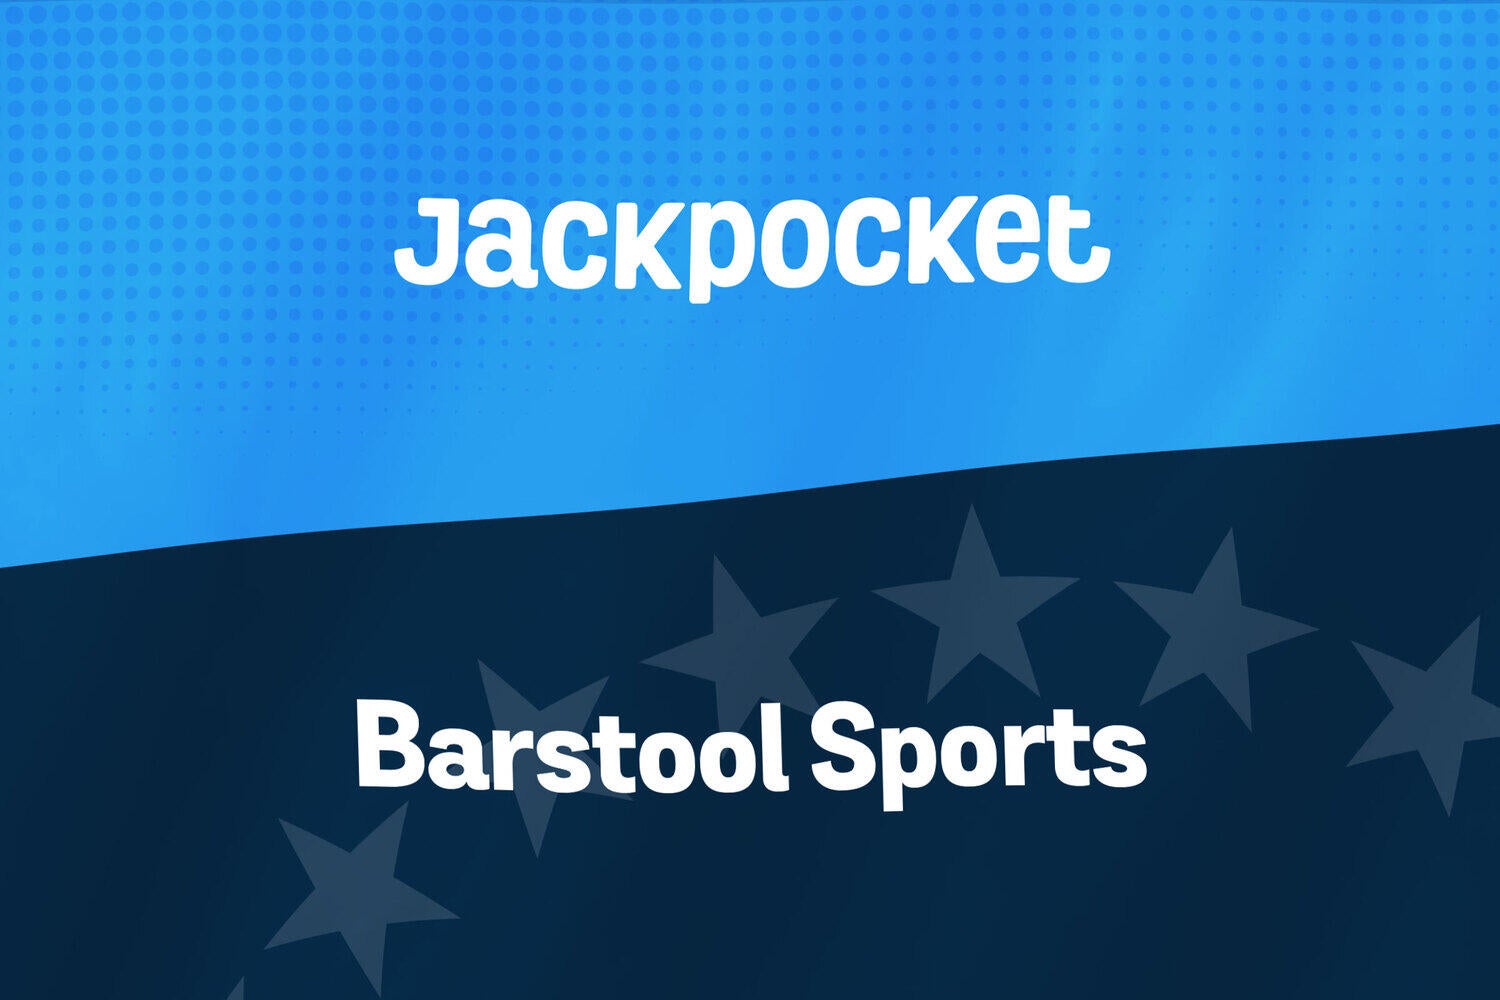 Barstool Sports and Jackpocket